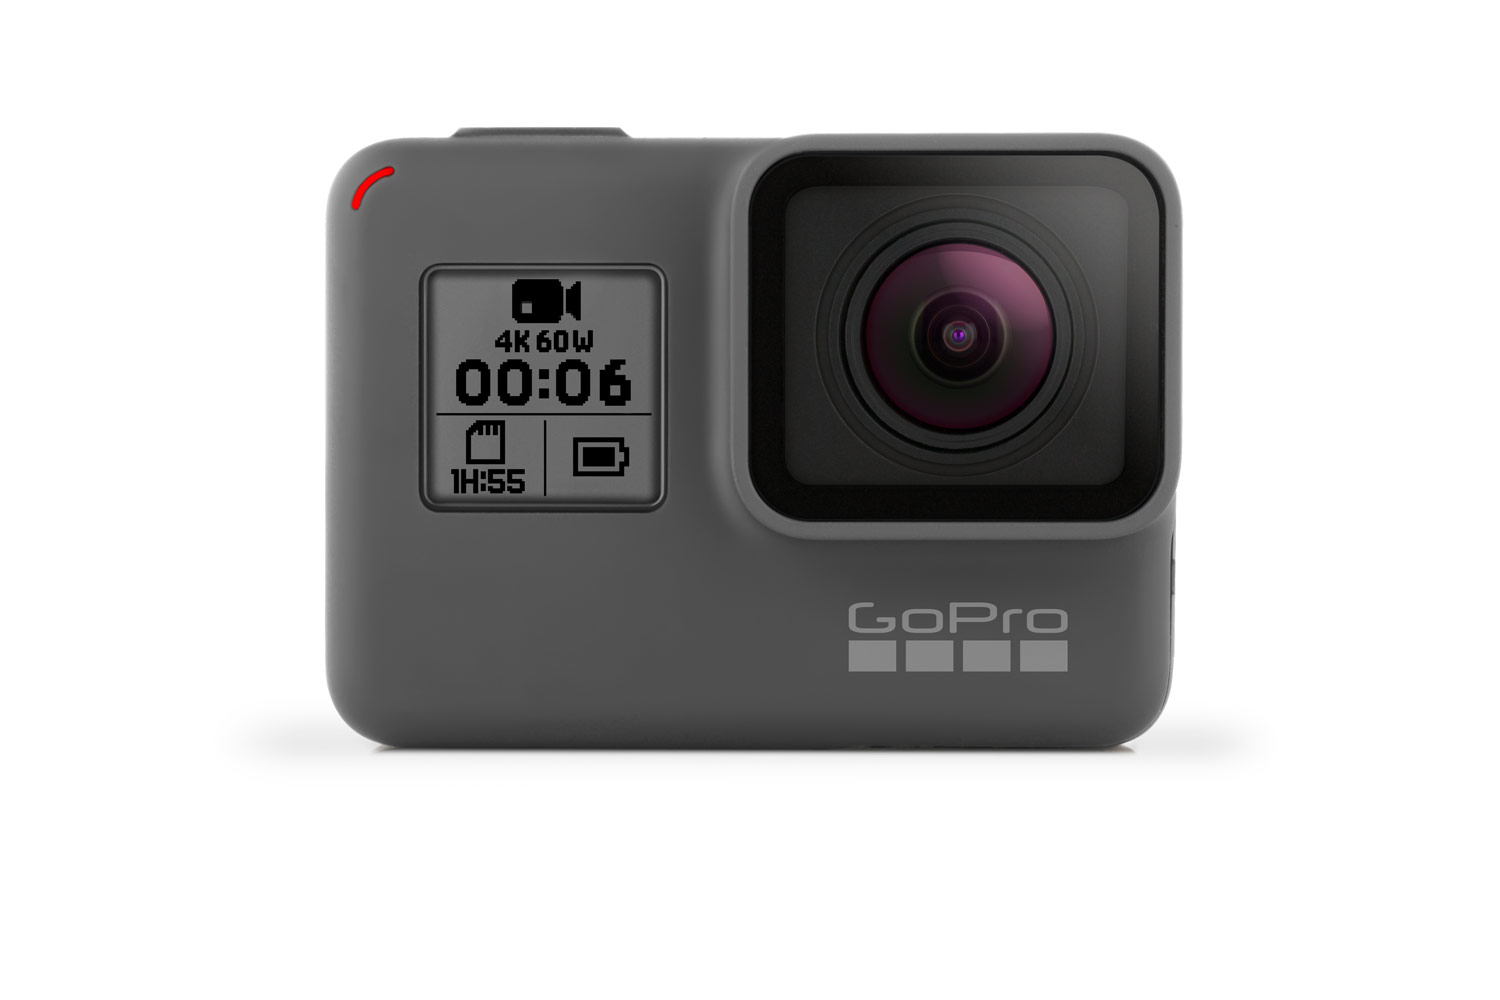 GoPro HERO6 Black Adventure Edition Action Video Camera